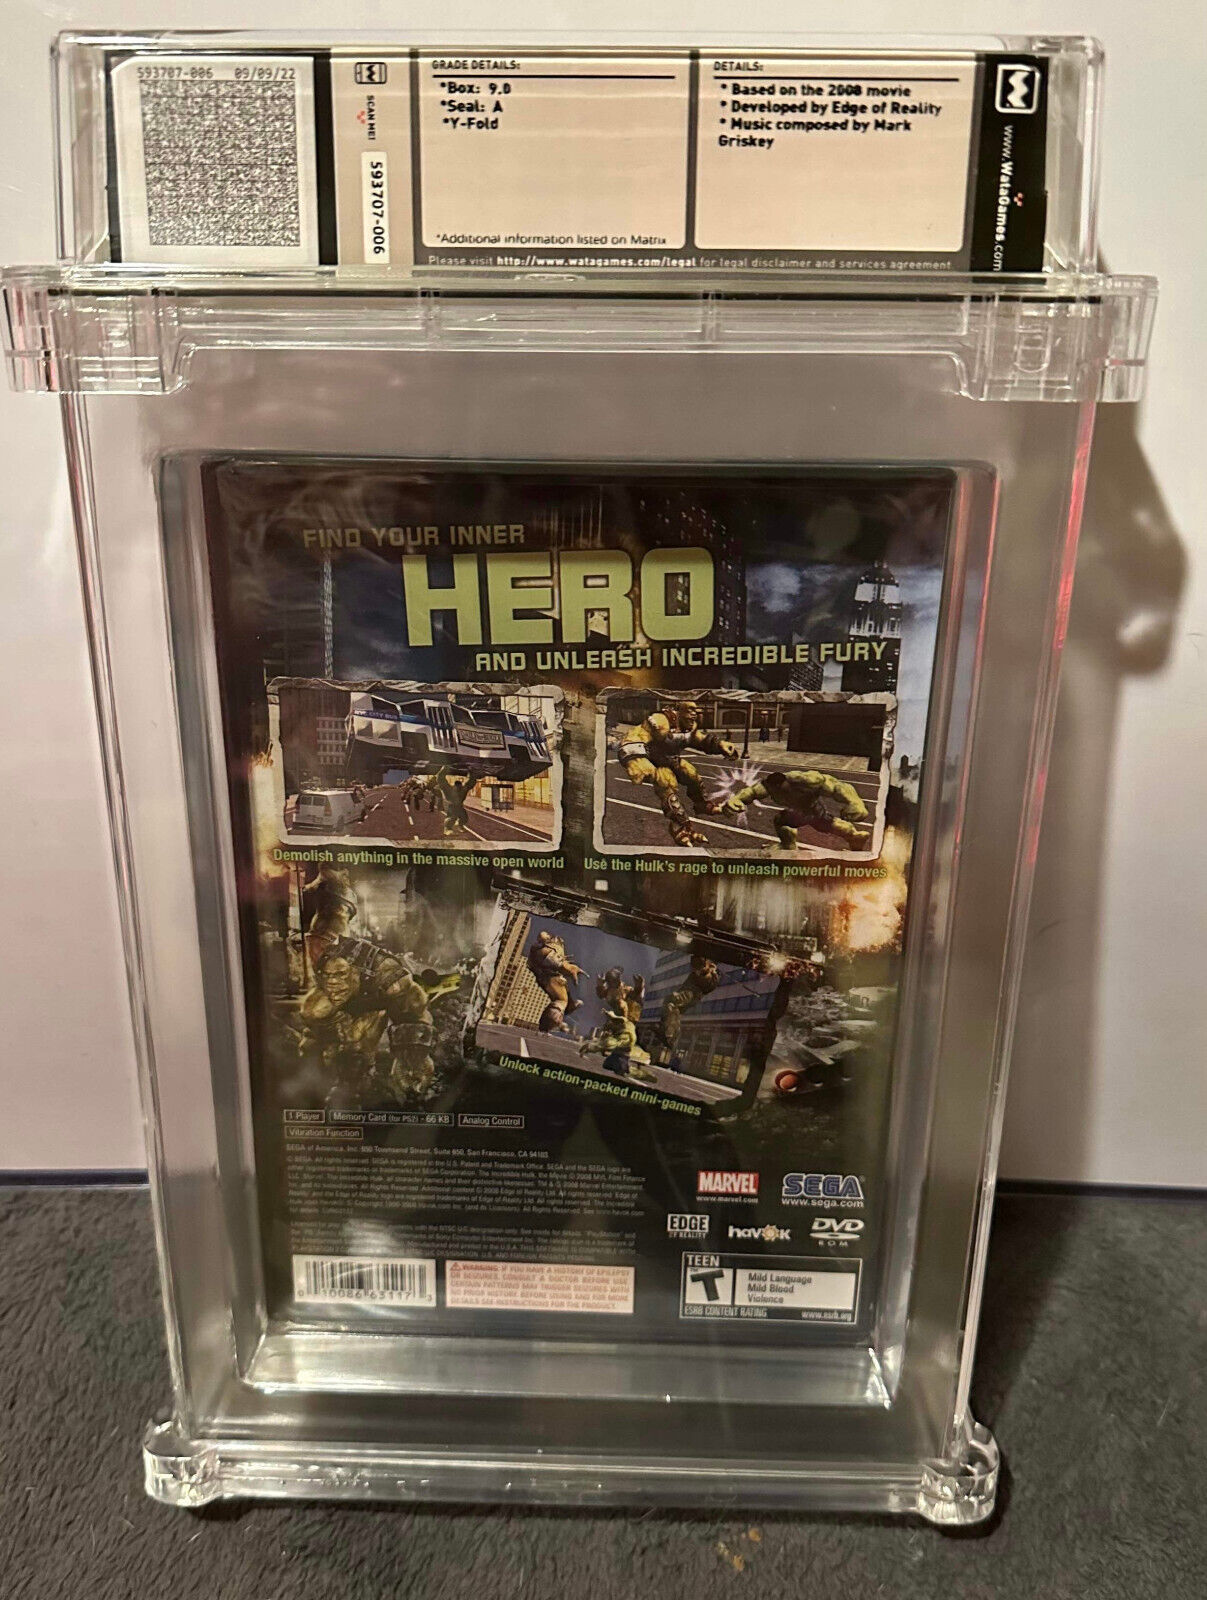 The Incredible Hulk - Playstation 2 WATA 9.0 Certified Game A